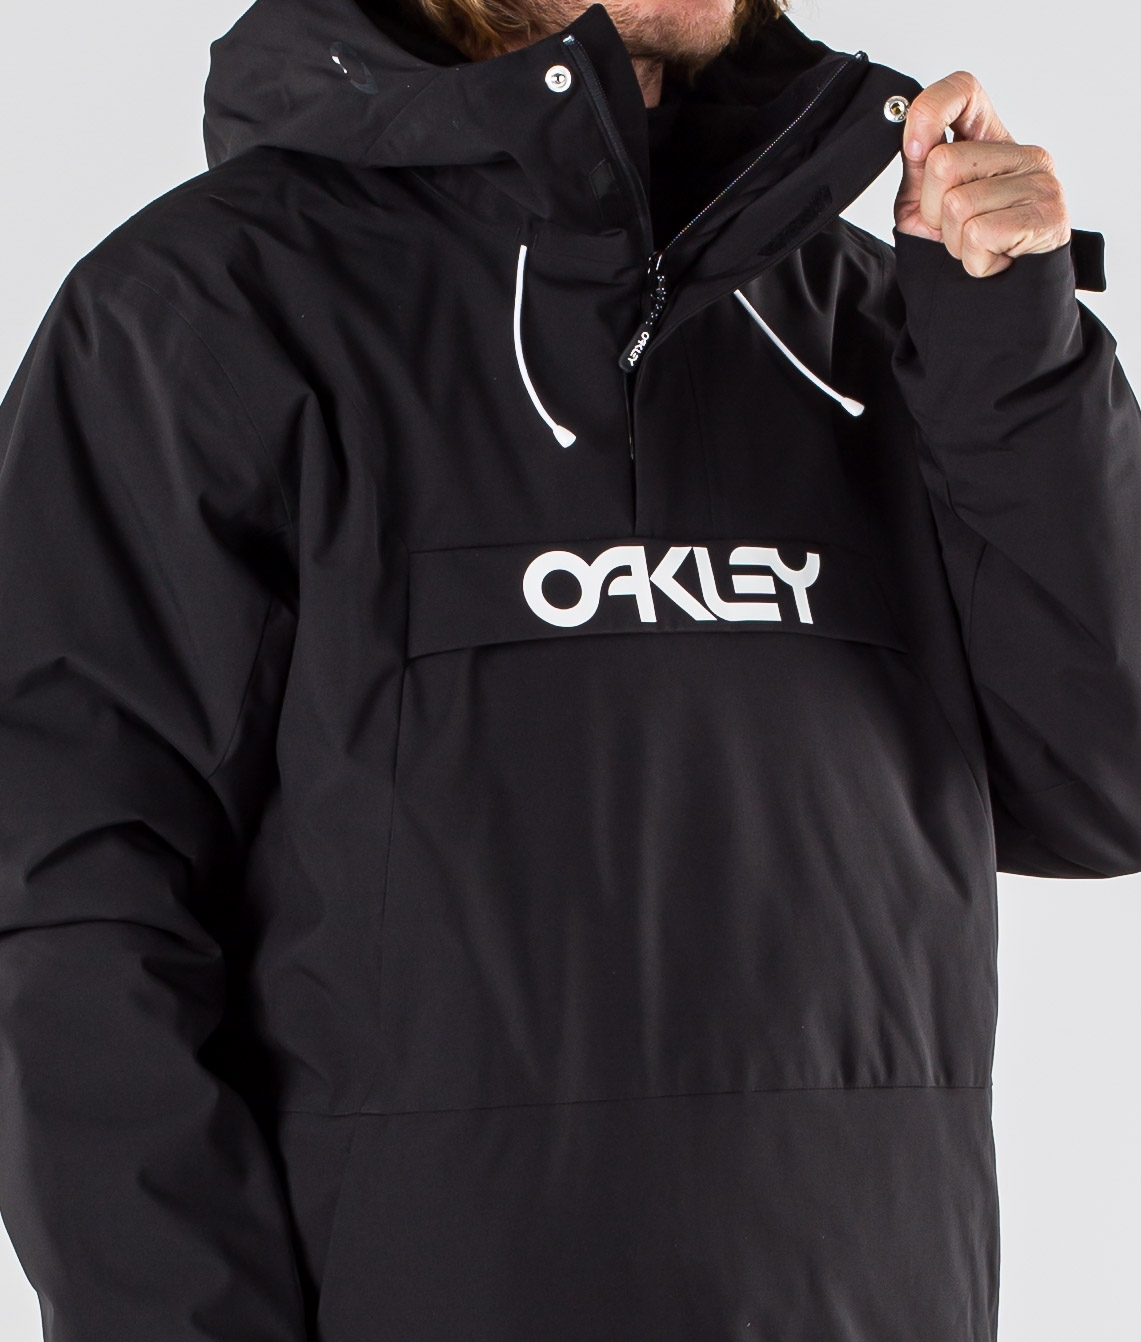 Oakley Insulated Anorak Ski Jacket 